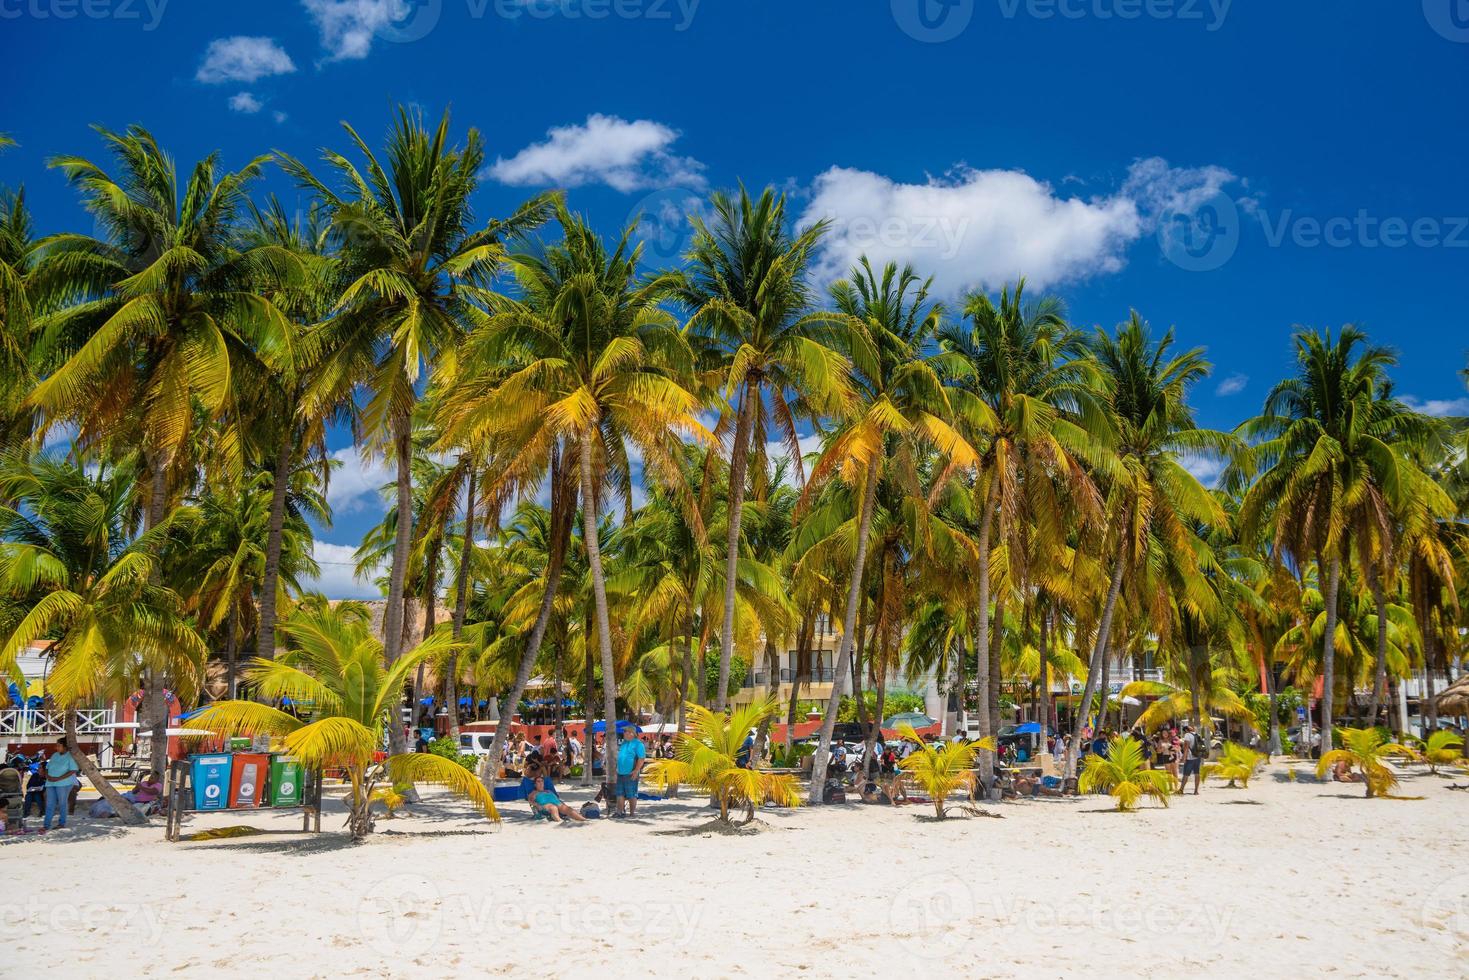 wit zand strand met cocos handpalmen, isla mujeres eiland, caraïben zee, cancun, Yucatán, Mexico foto